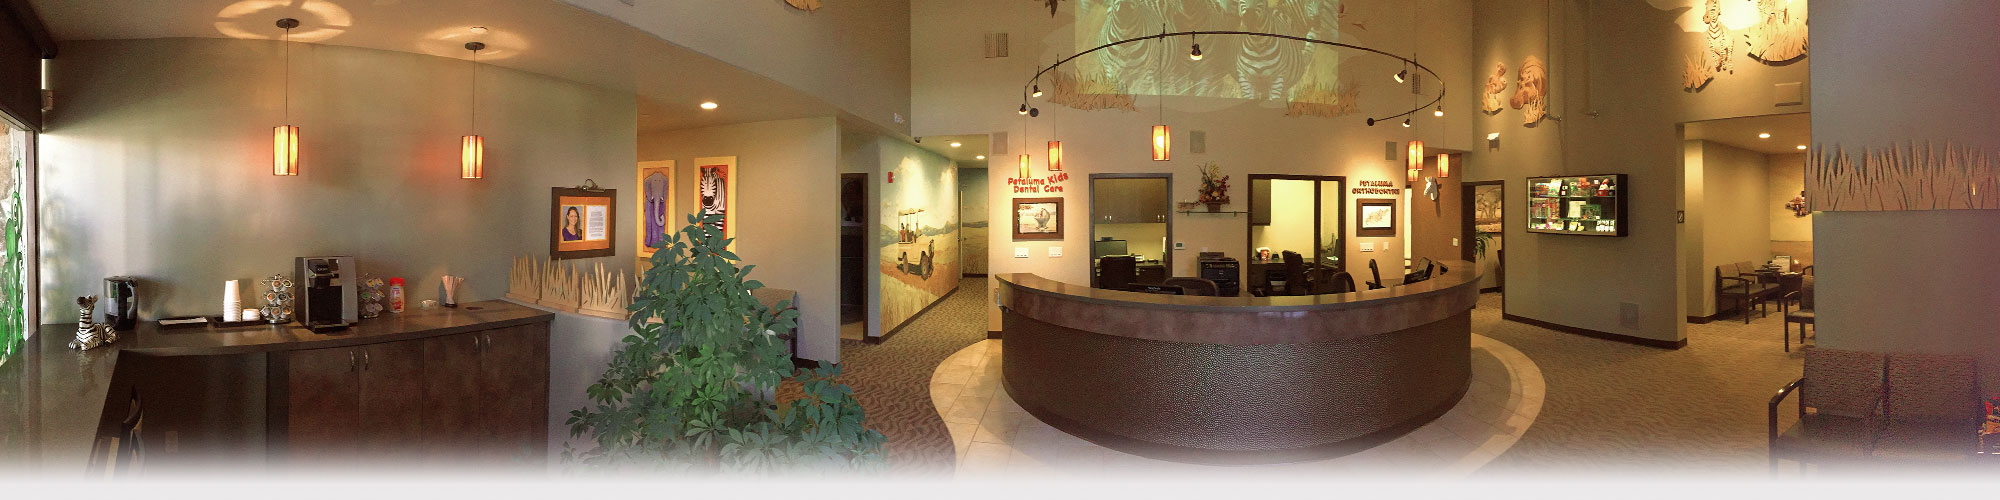 Petaluma Orthodontics - Our Welcoming Office